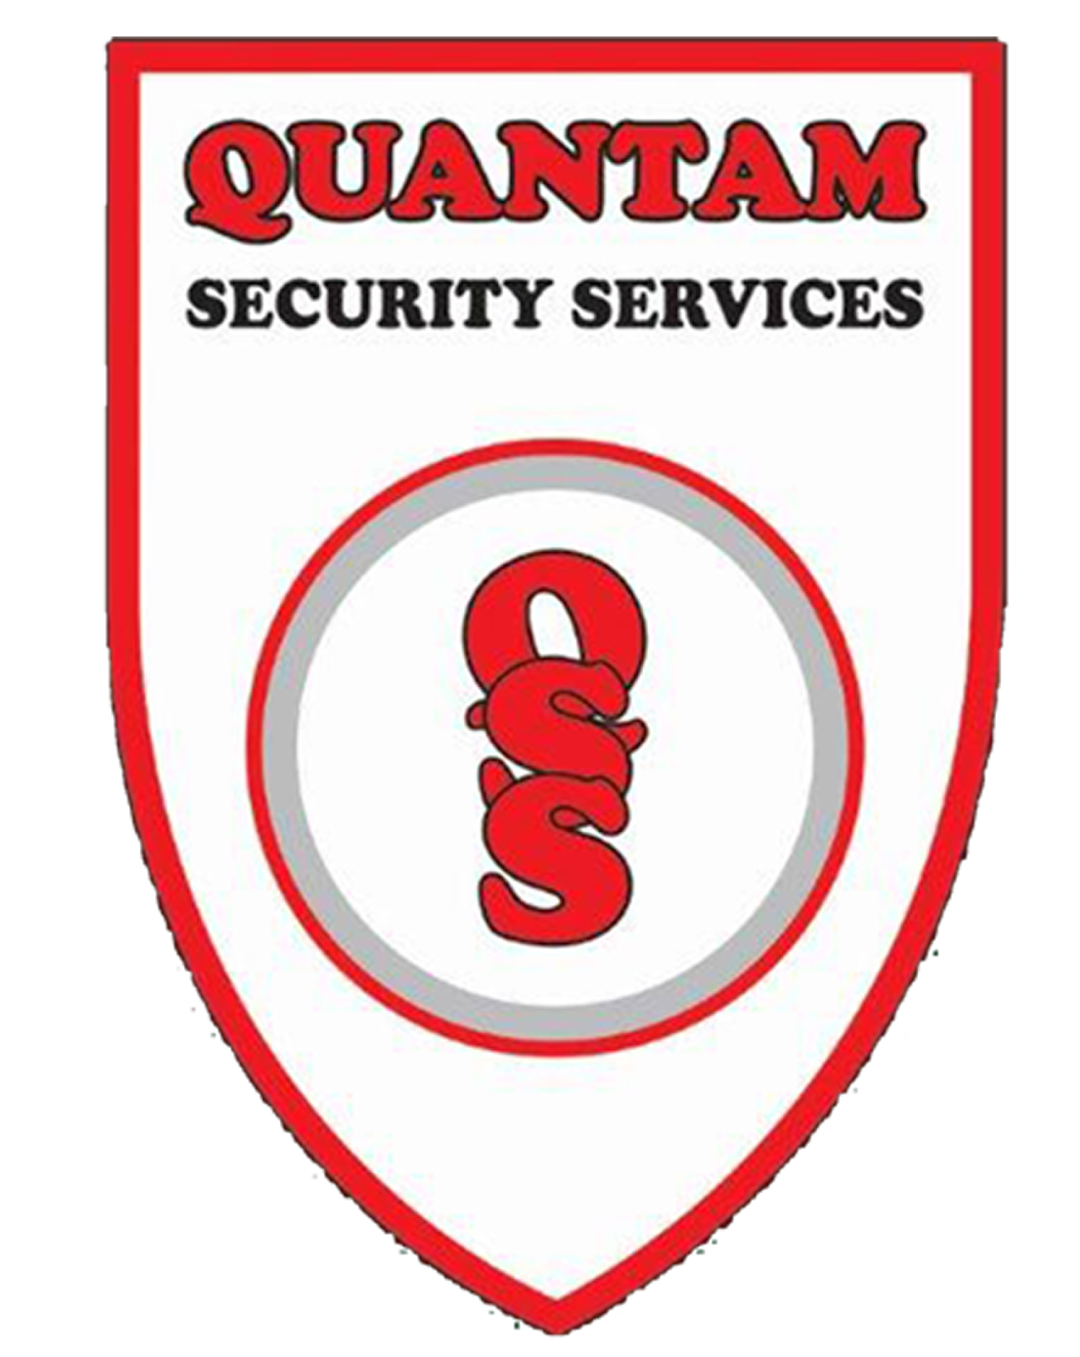 Quantam Security Services and Training Academy